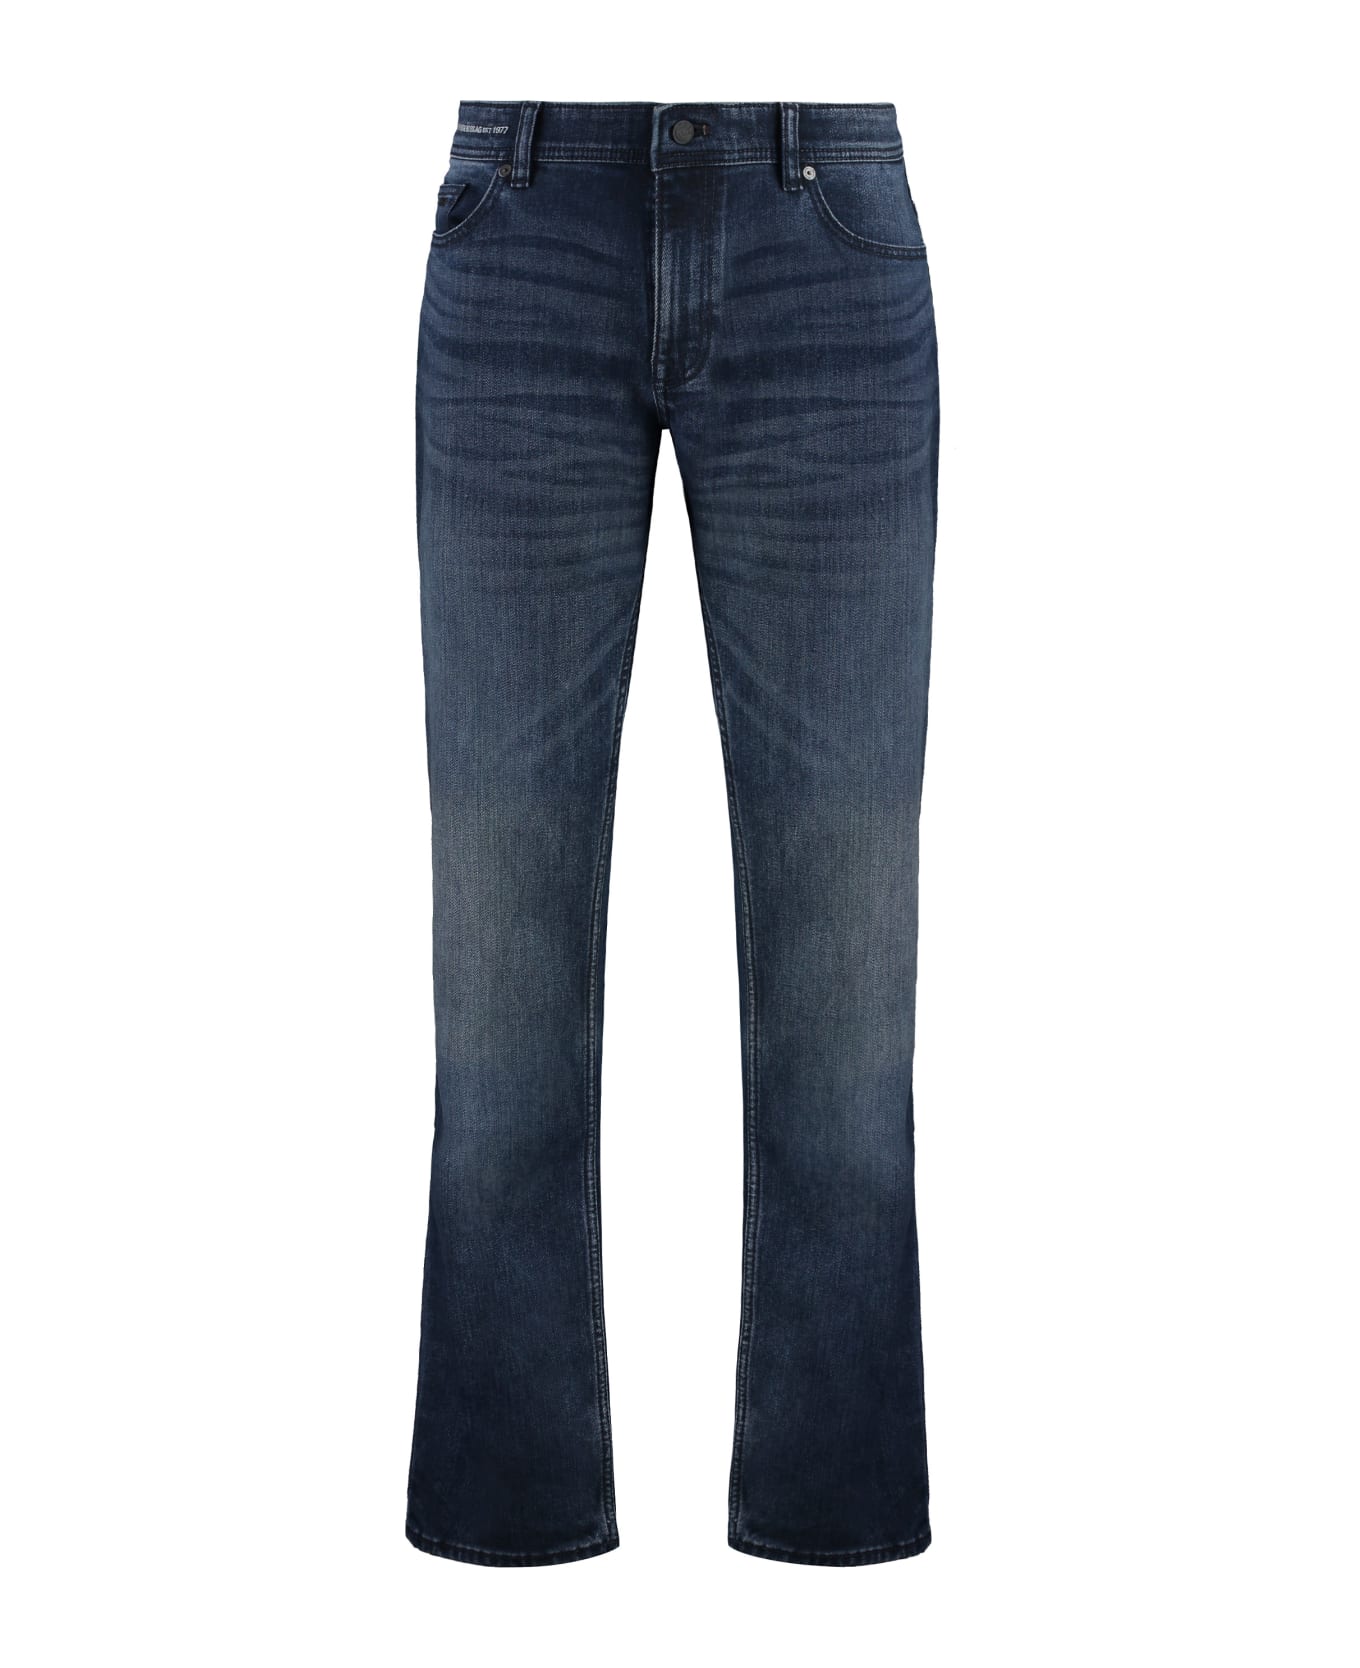 Hugo Boss Slim Fit Jeans - Denim